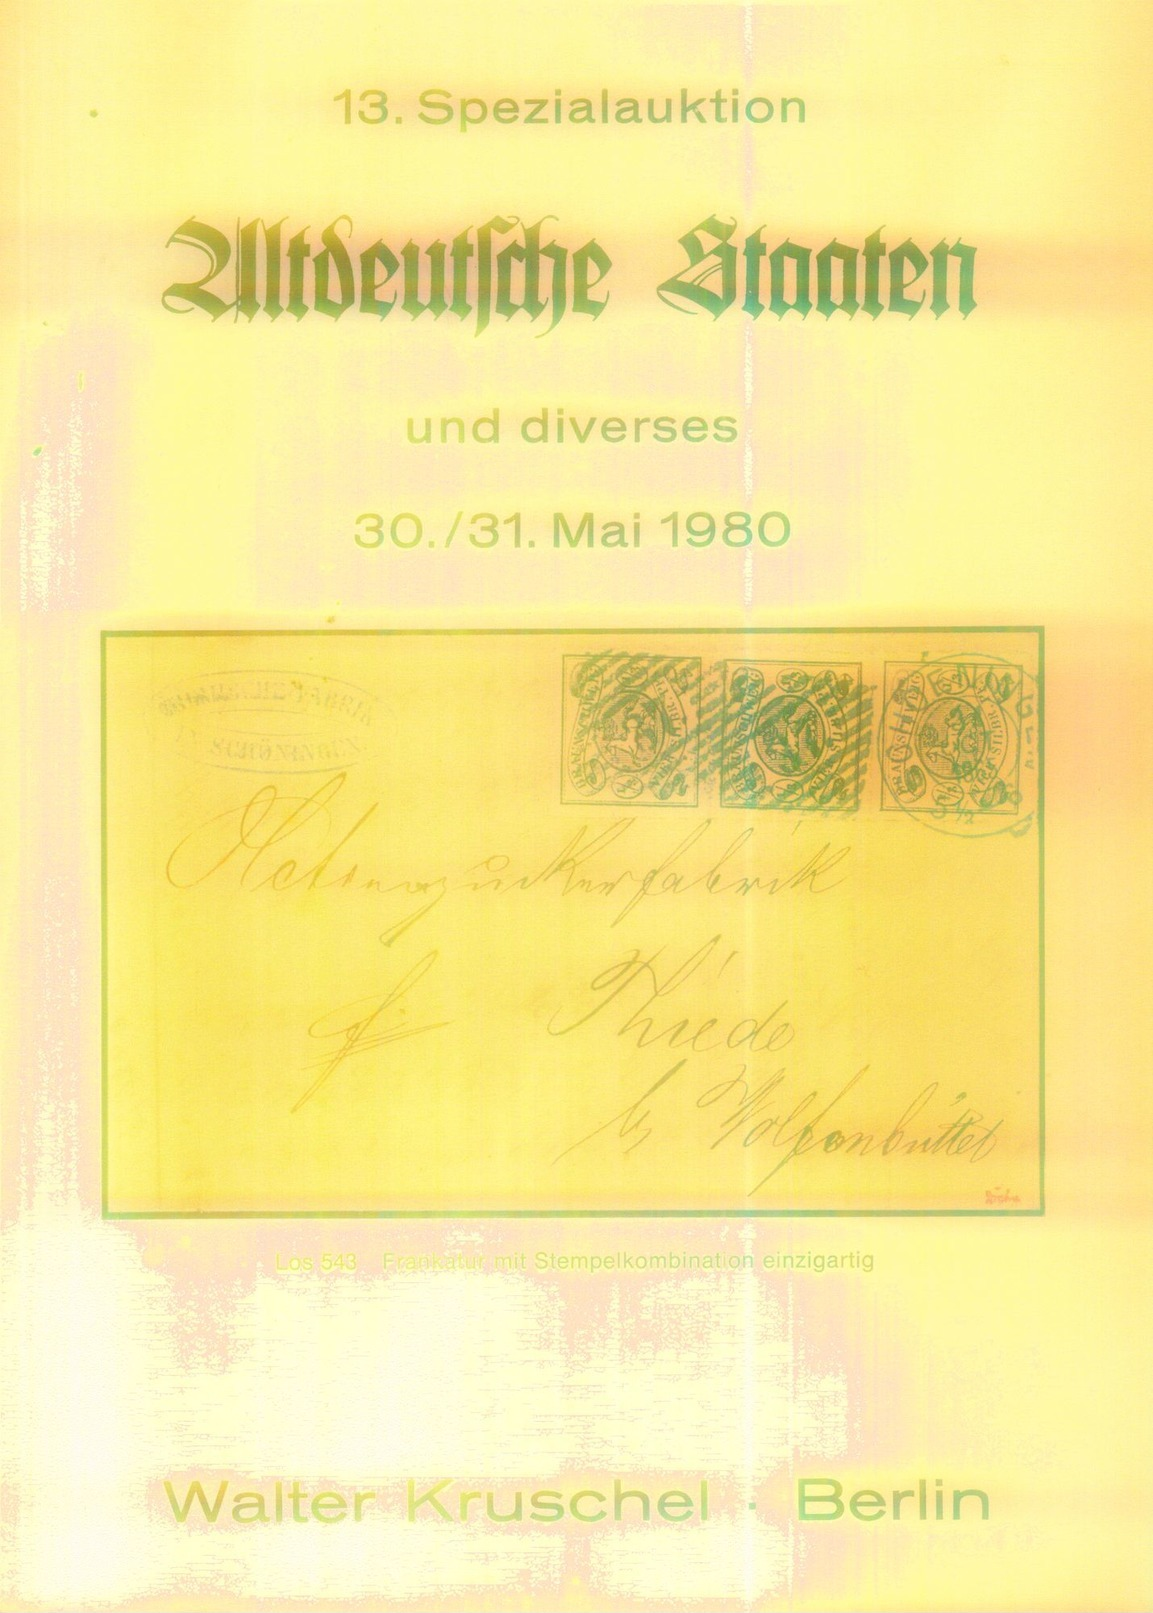 13. Kruschel Auktion 1980 - Altdeutsche Staaten - Catálogos De Casas De Ventas